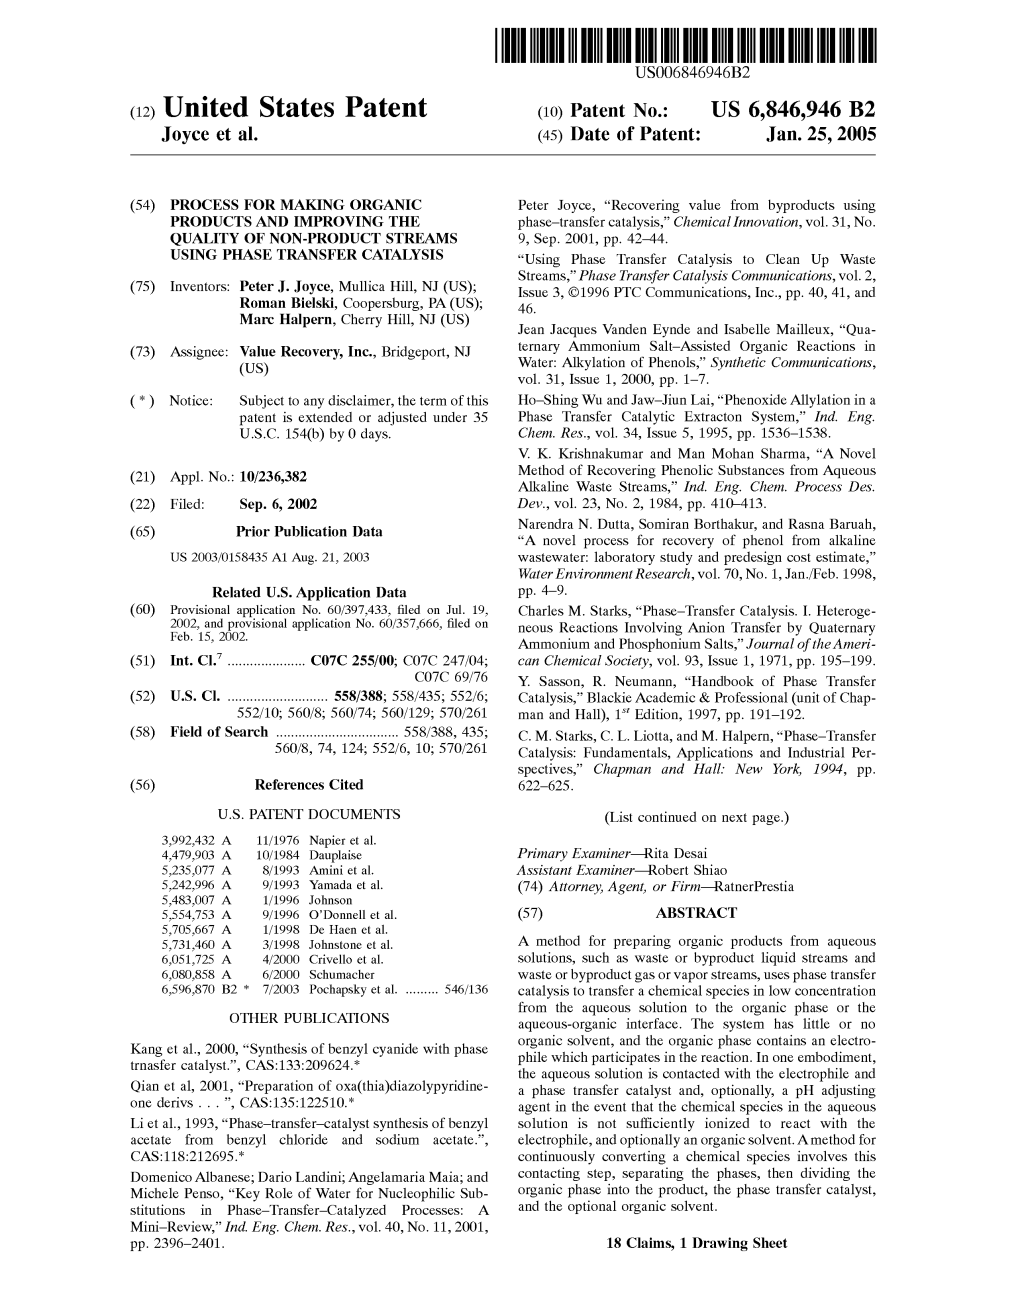 (12) United States Patent (10) Patent No.: US 6,846,946 B2 Joyce Et Al